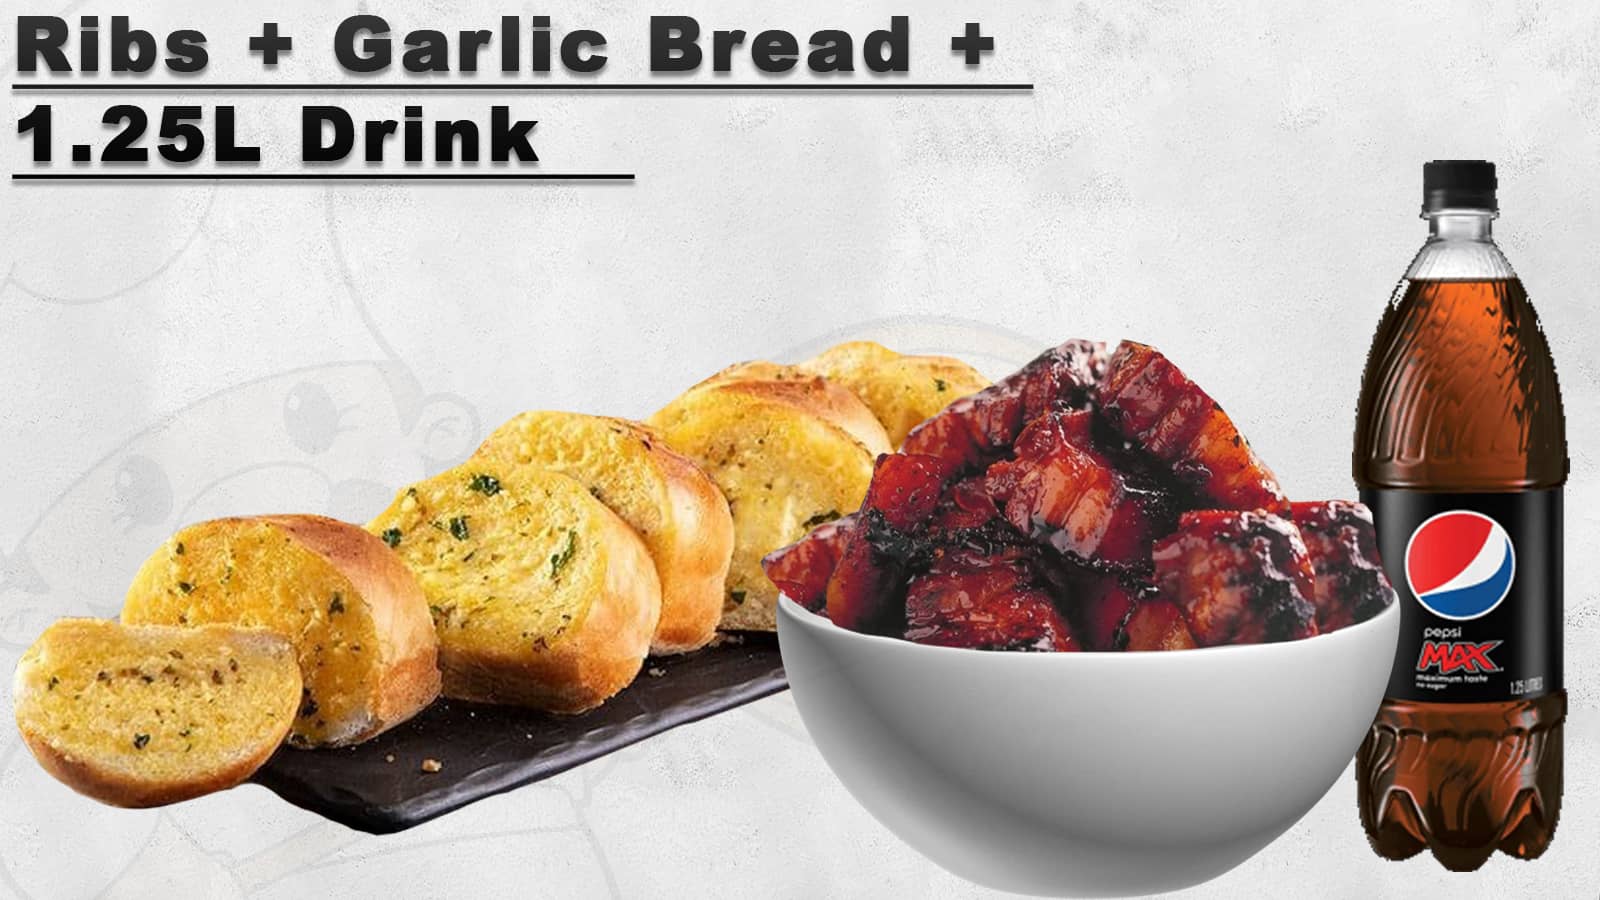 Ribs + Garlic Bread + 1.25 Drink